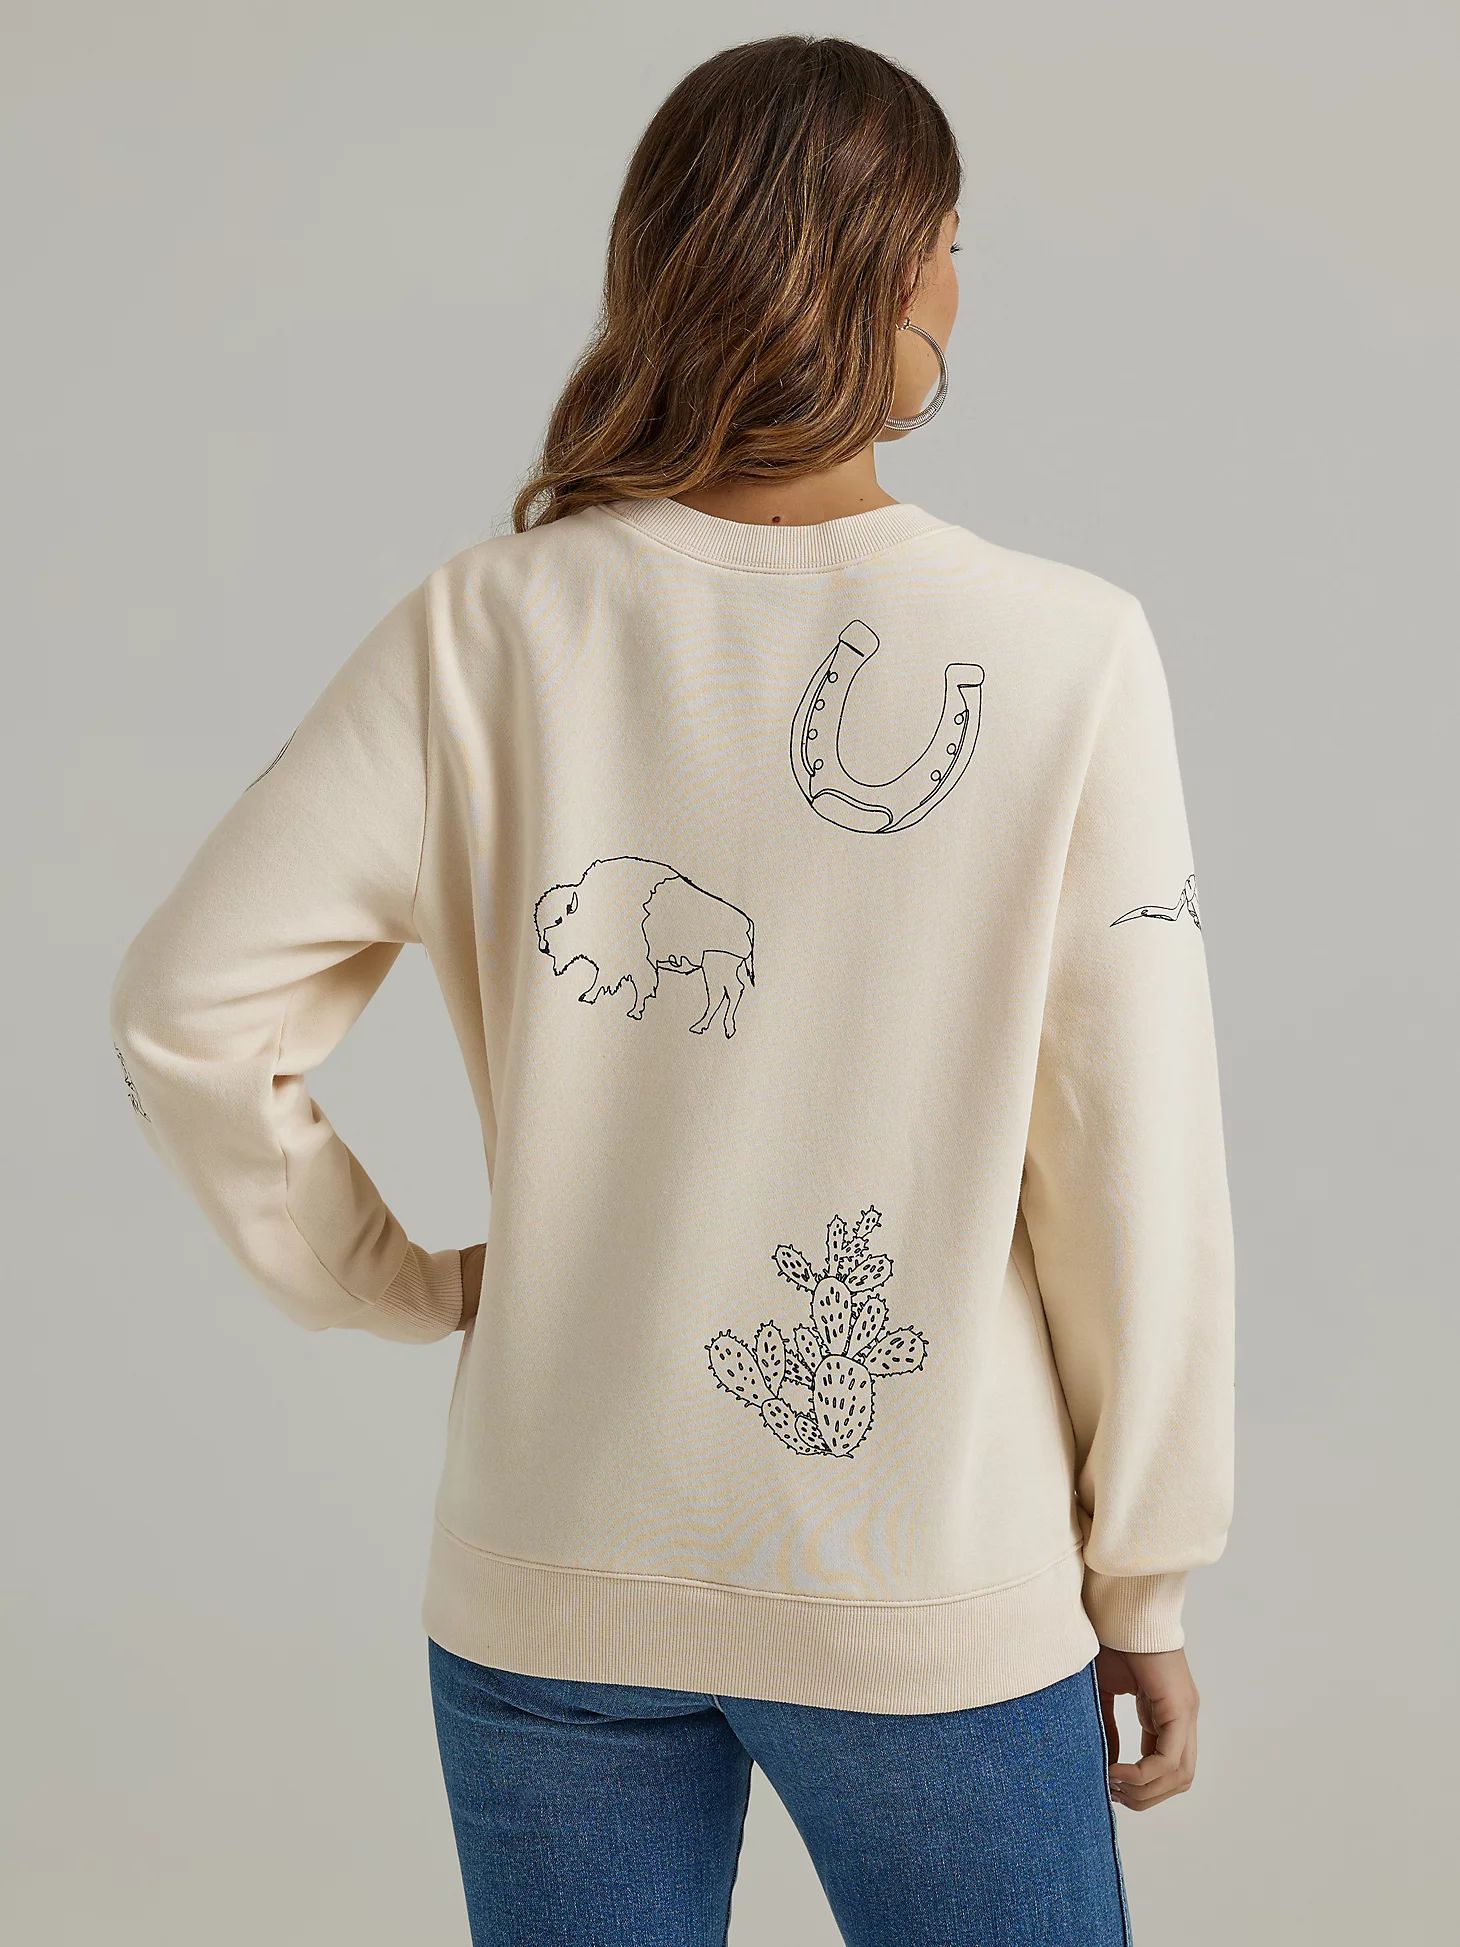 Women's Wrangler Cowboy Icons Pullover Sweatshirt in Egret | Wrangler